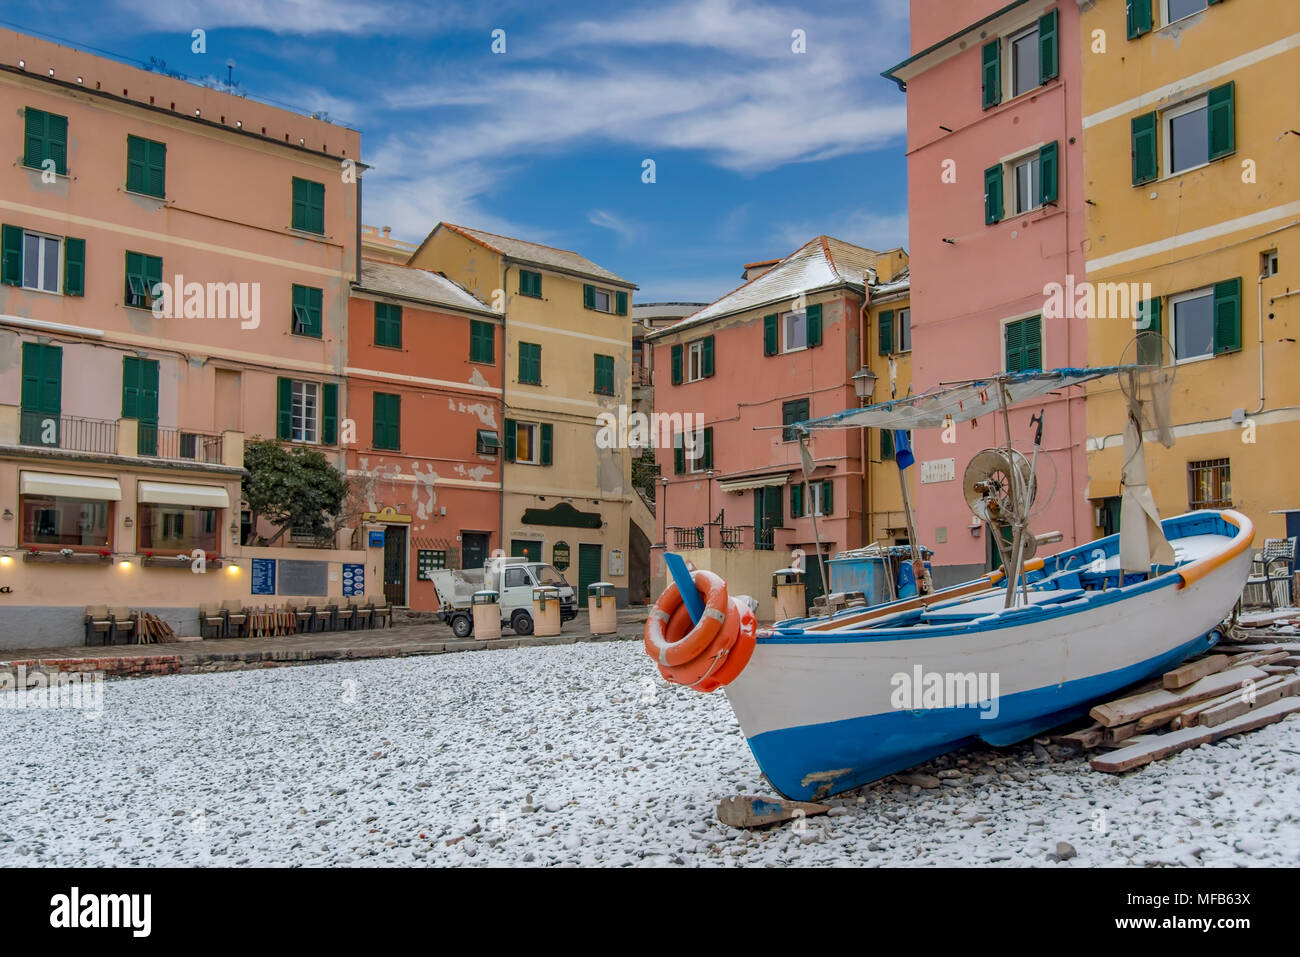 famous tourist resort of the Liguria region Stock Photo